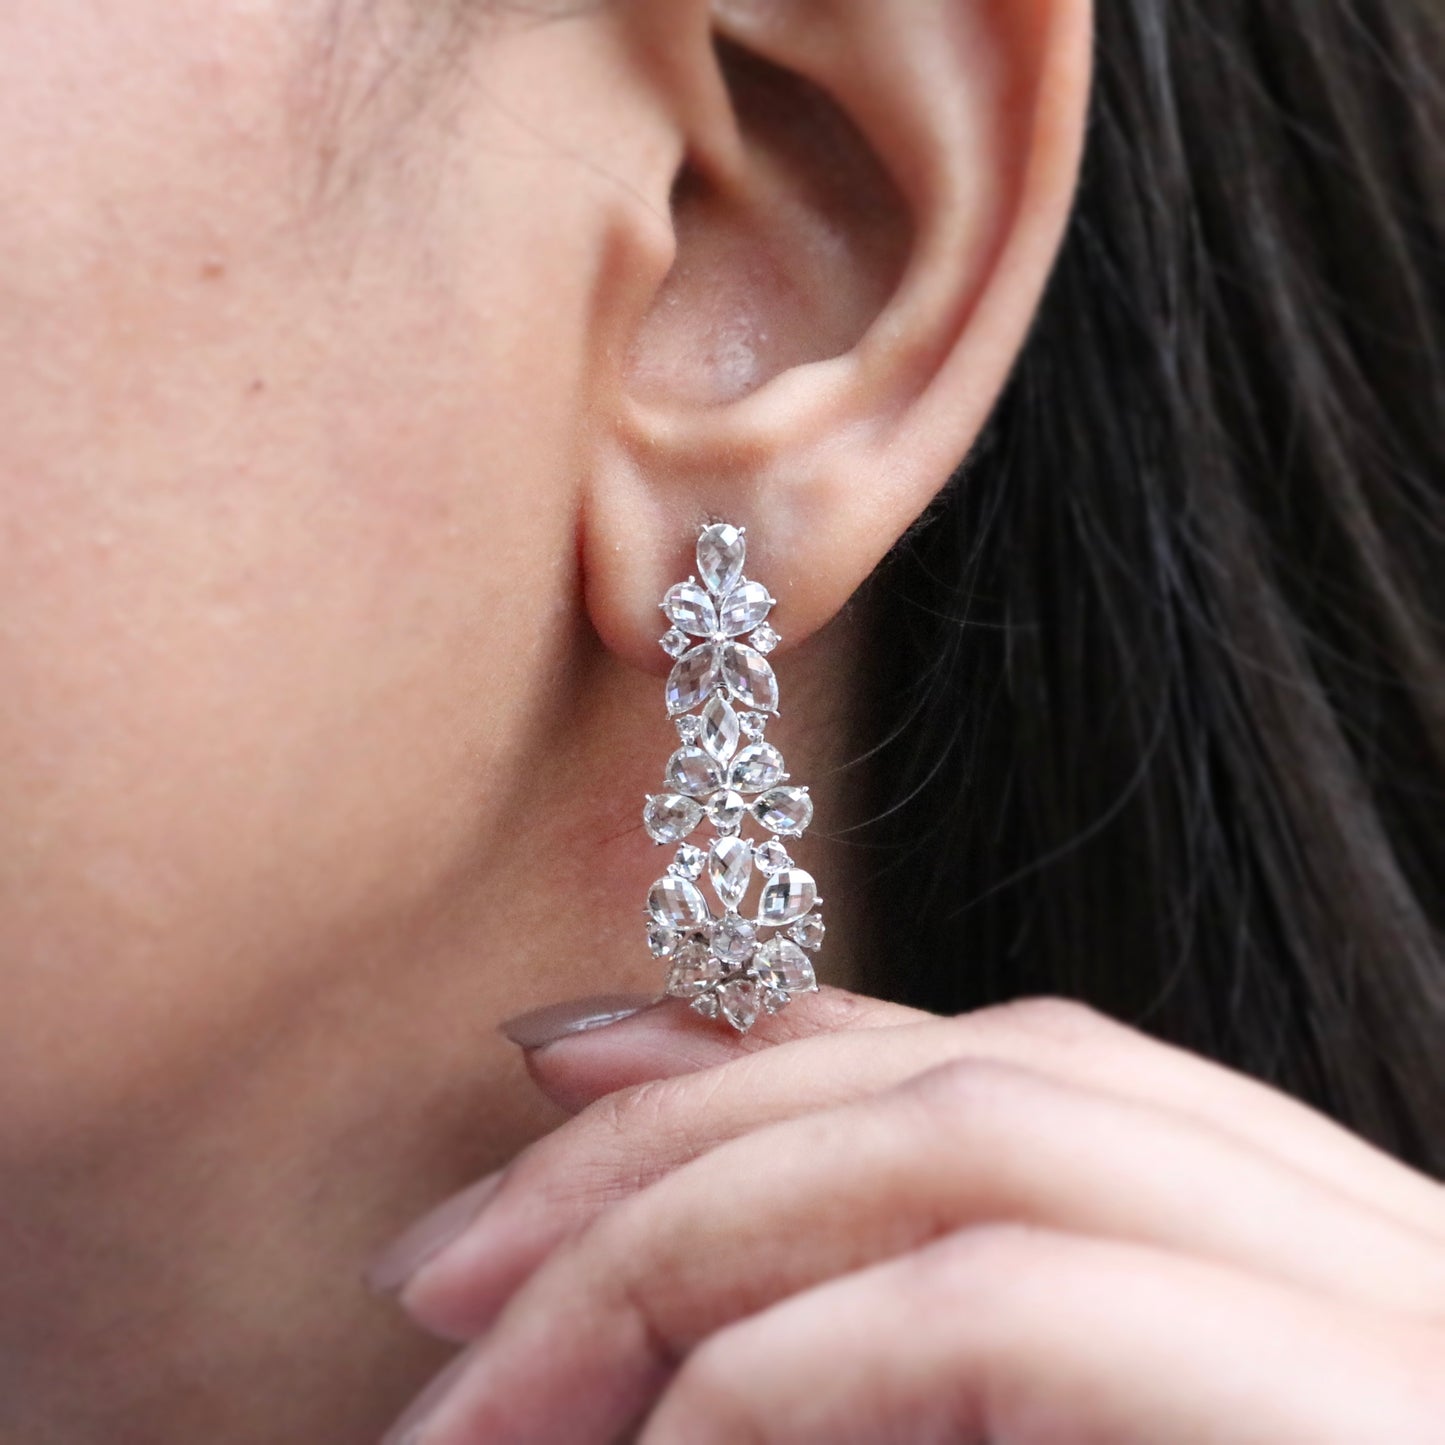 Ethorise Lab Diamond Earring - Fiona Diamonds - Fiona Diamonds